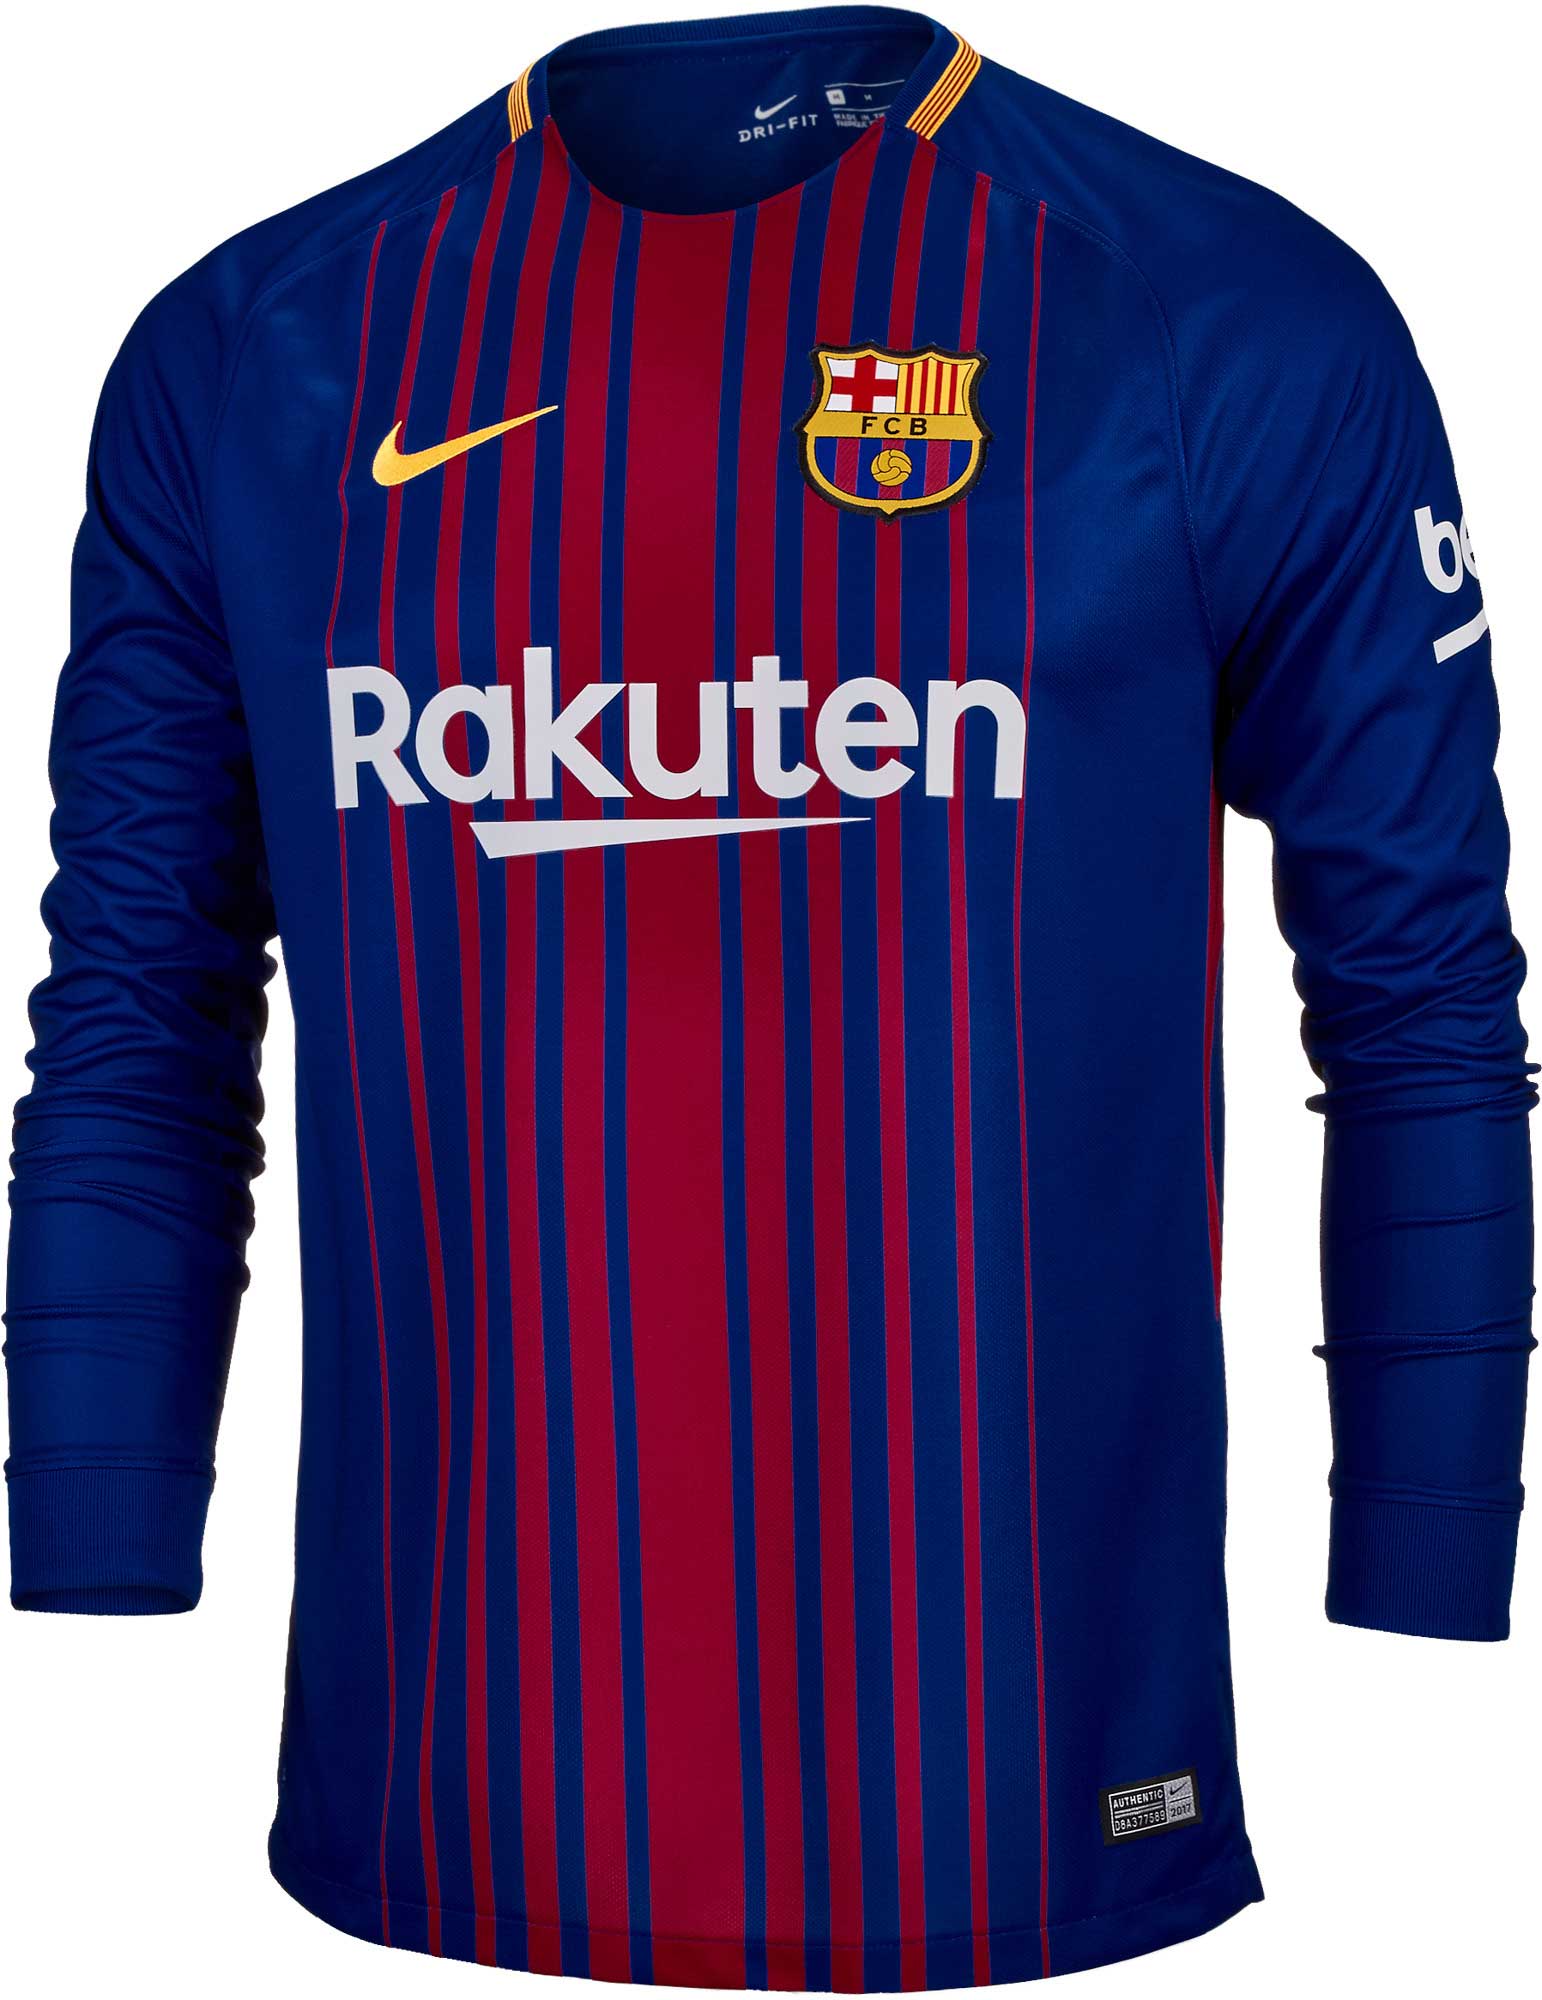 2017/18 Nike Barcelona Home L/S Jersey - SoccerPro.com